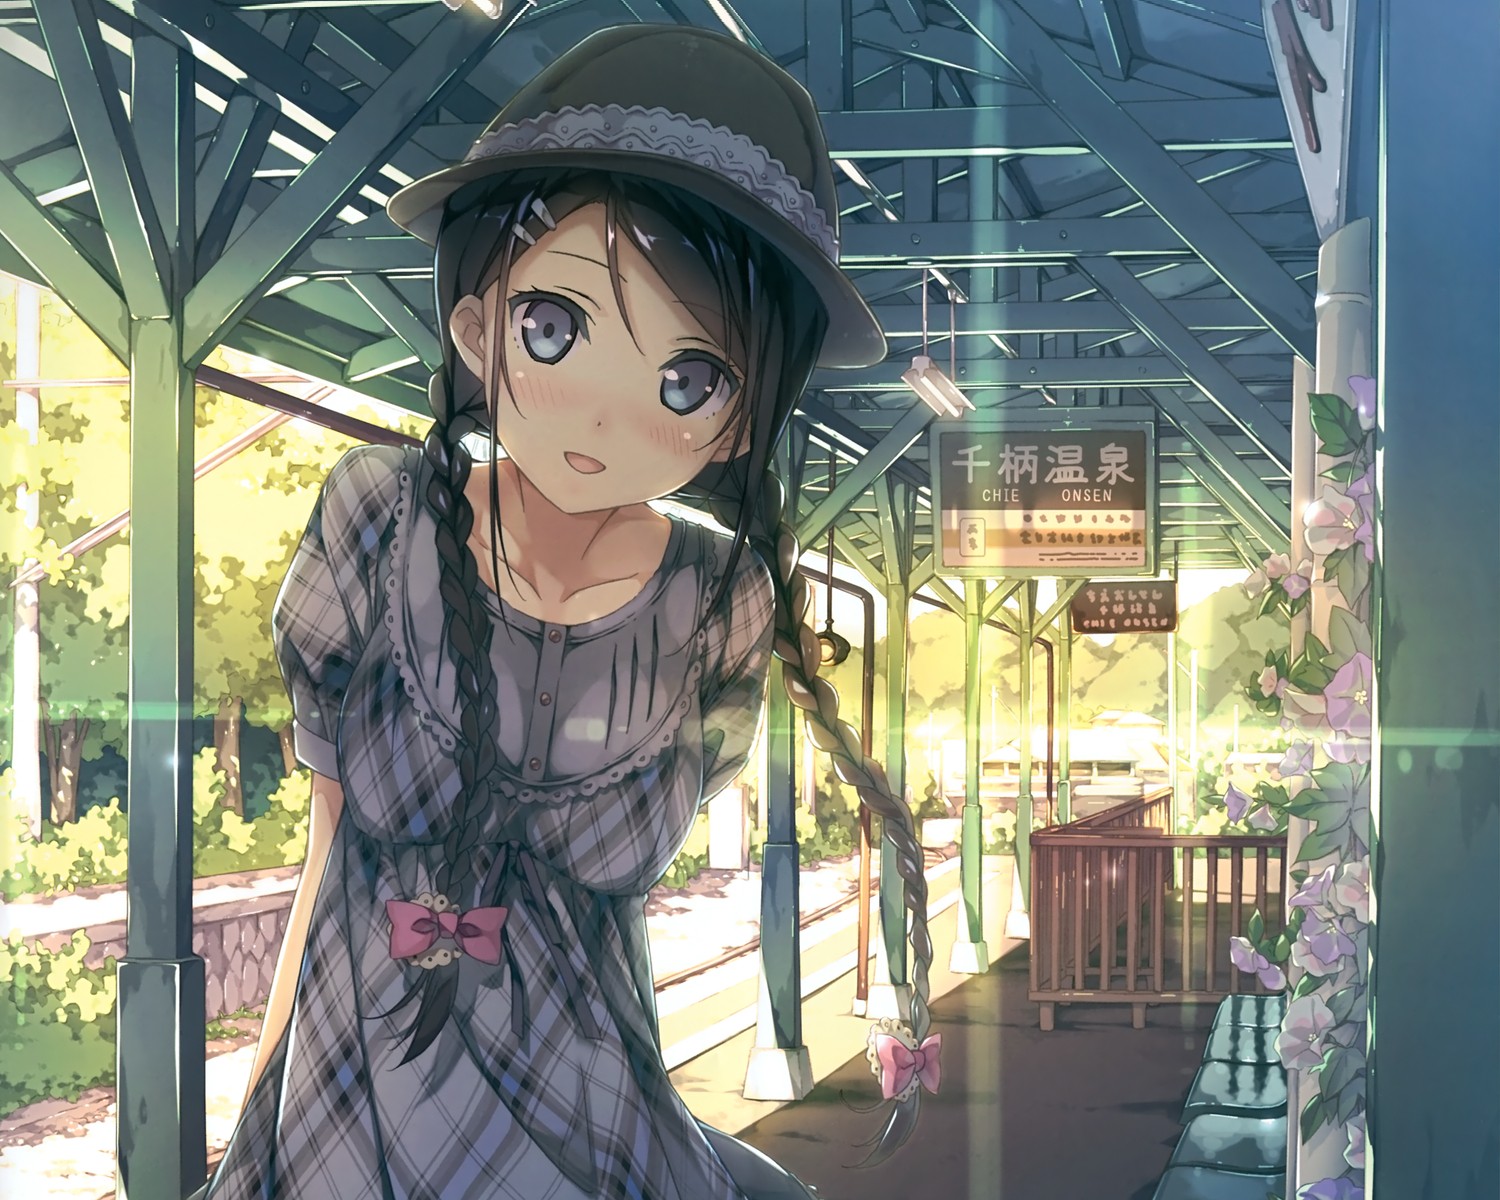 Anime 1500x1200 anime girls train station digital art Kantoku anime hat women with hats flowers dark hair looking at viewer dress braids